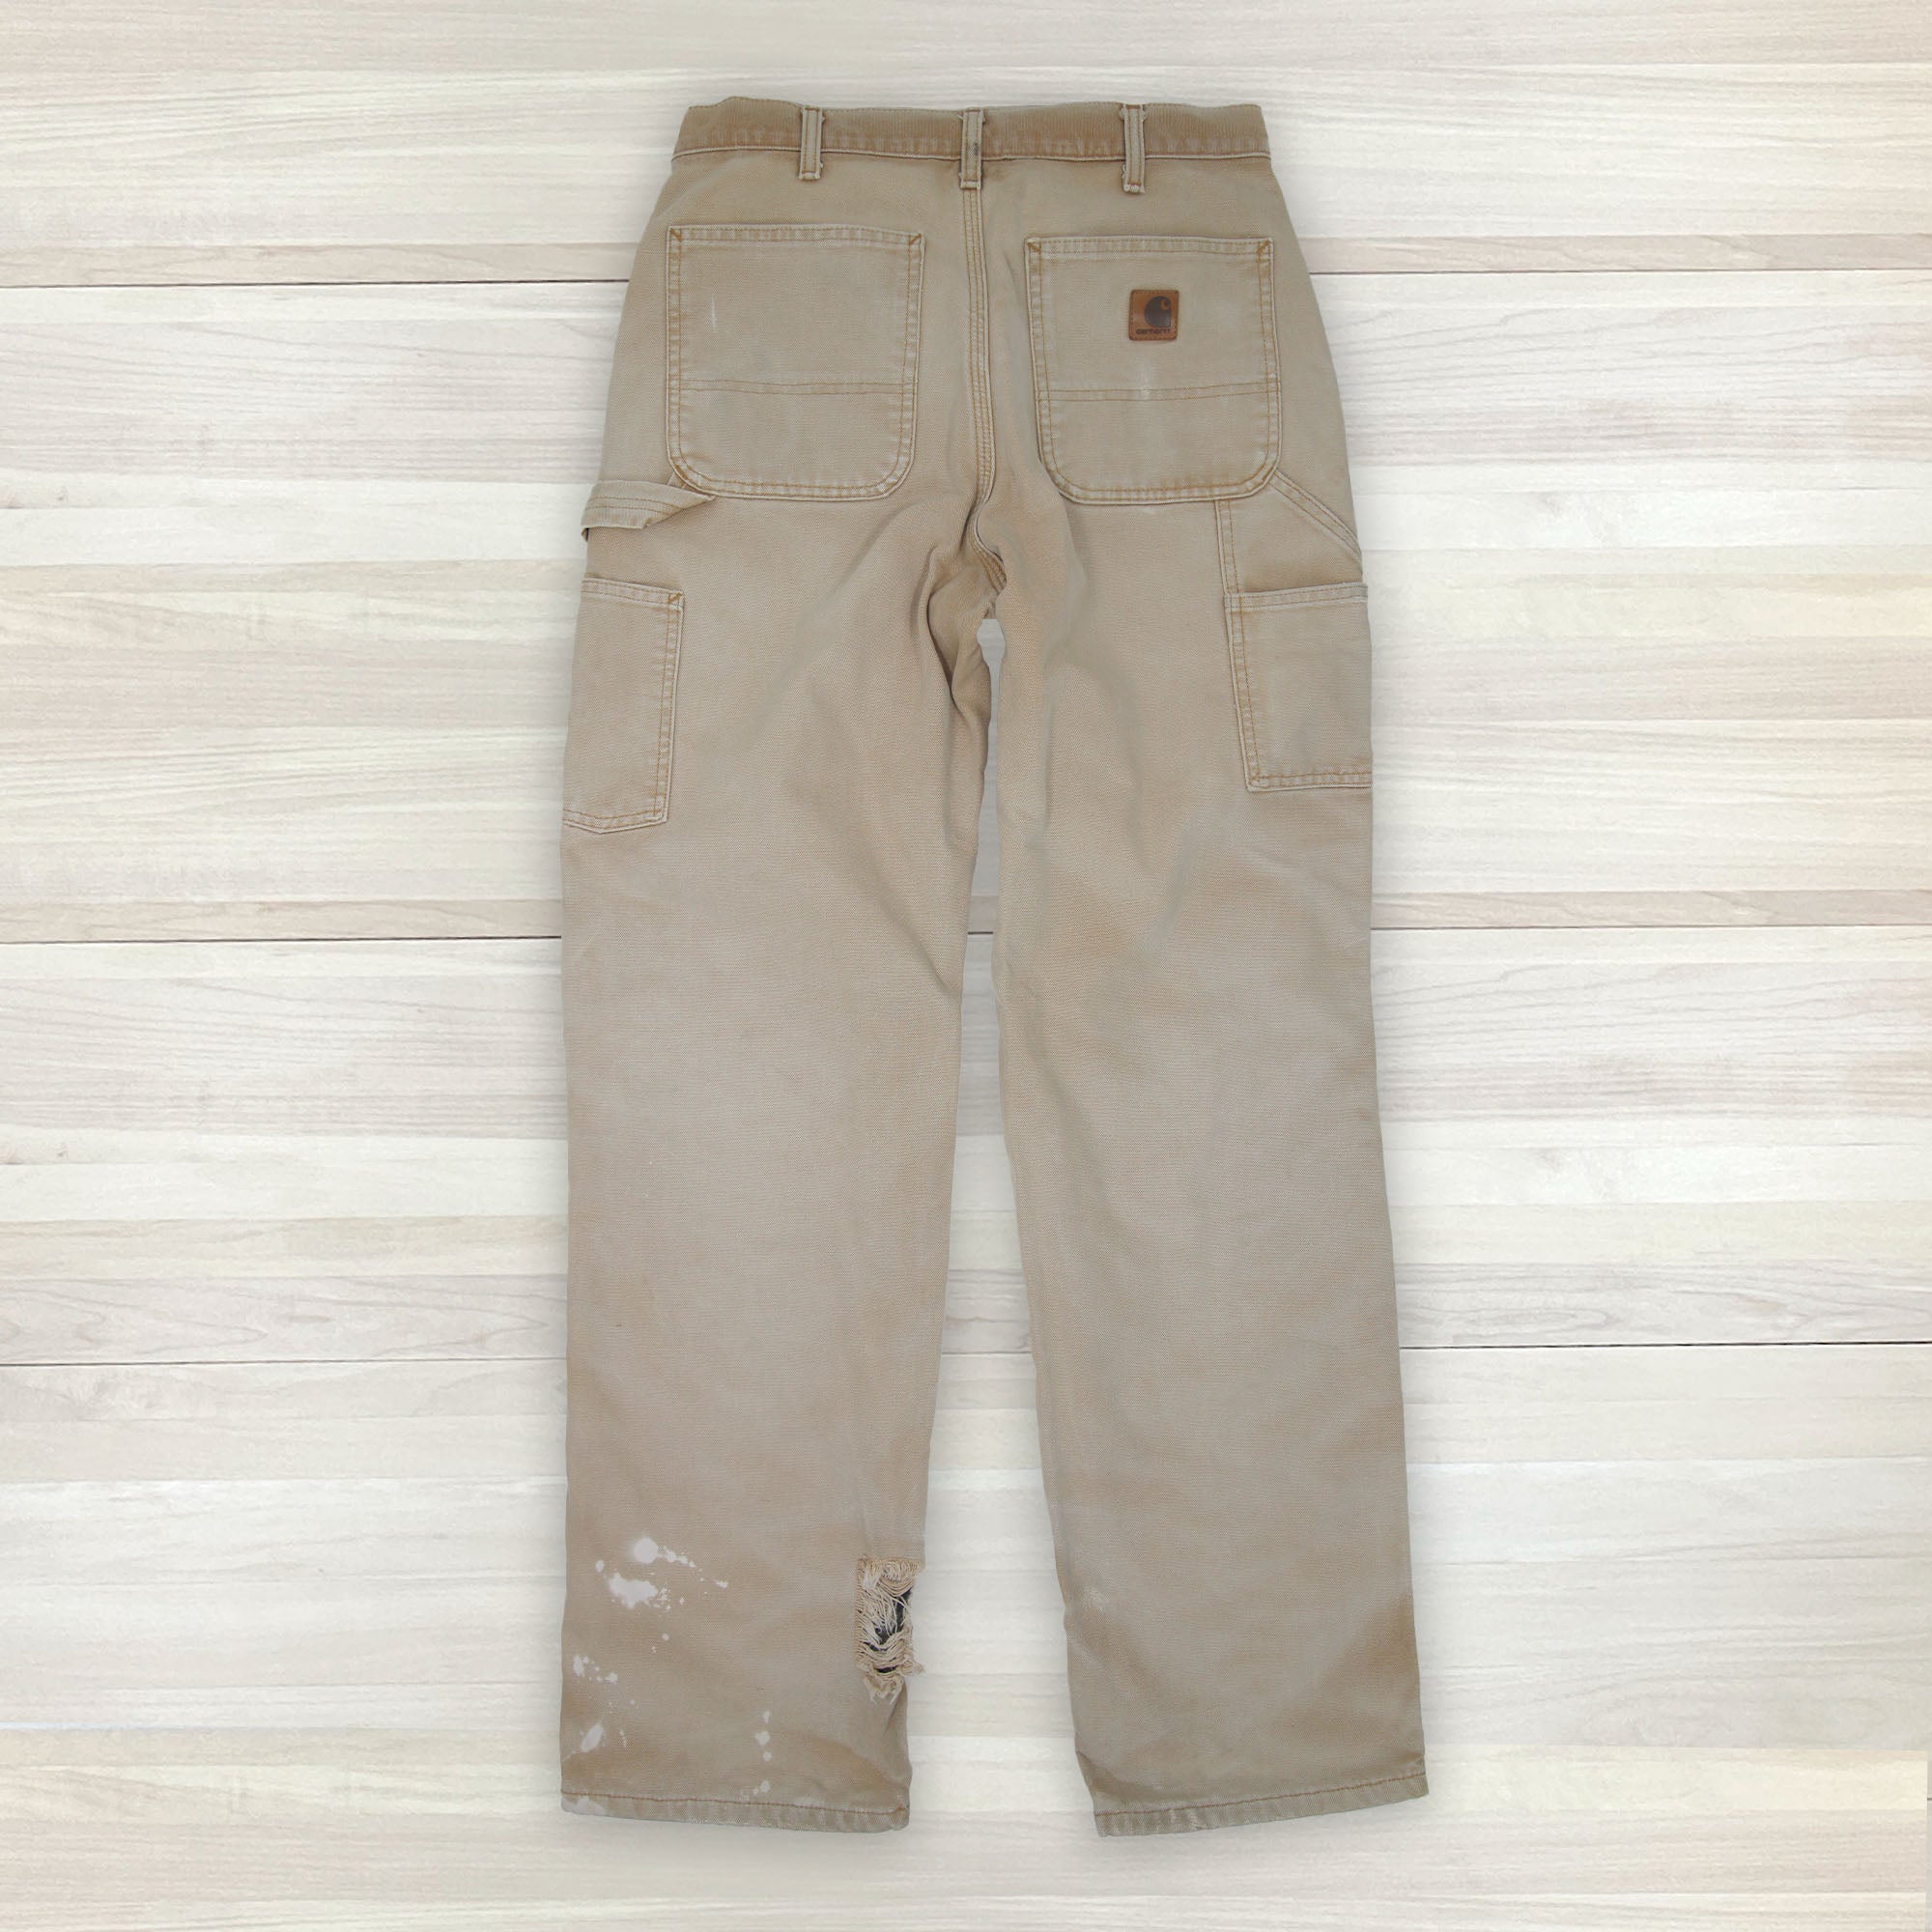 Men's Carhartt B111 BRN Flannel Lined Loose Fit Pants - Measures 30x33-3